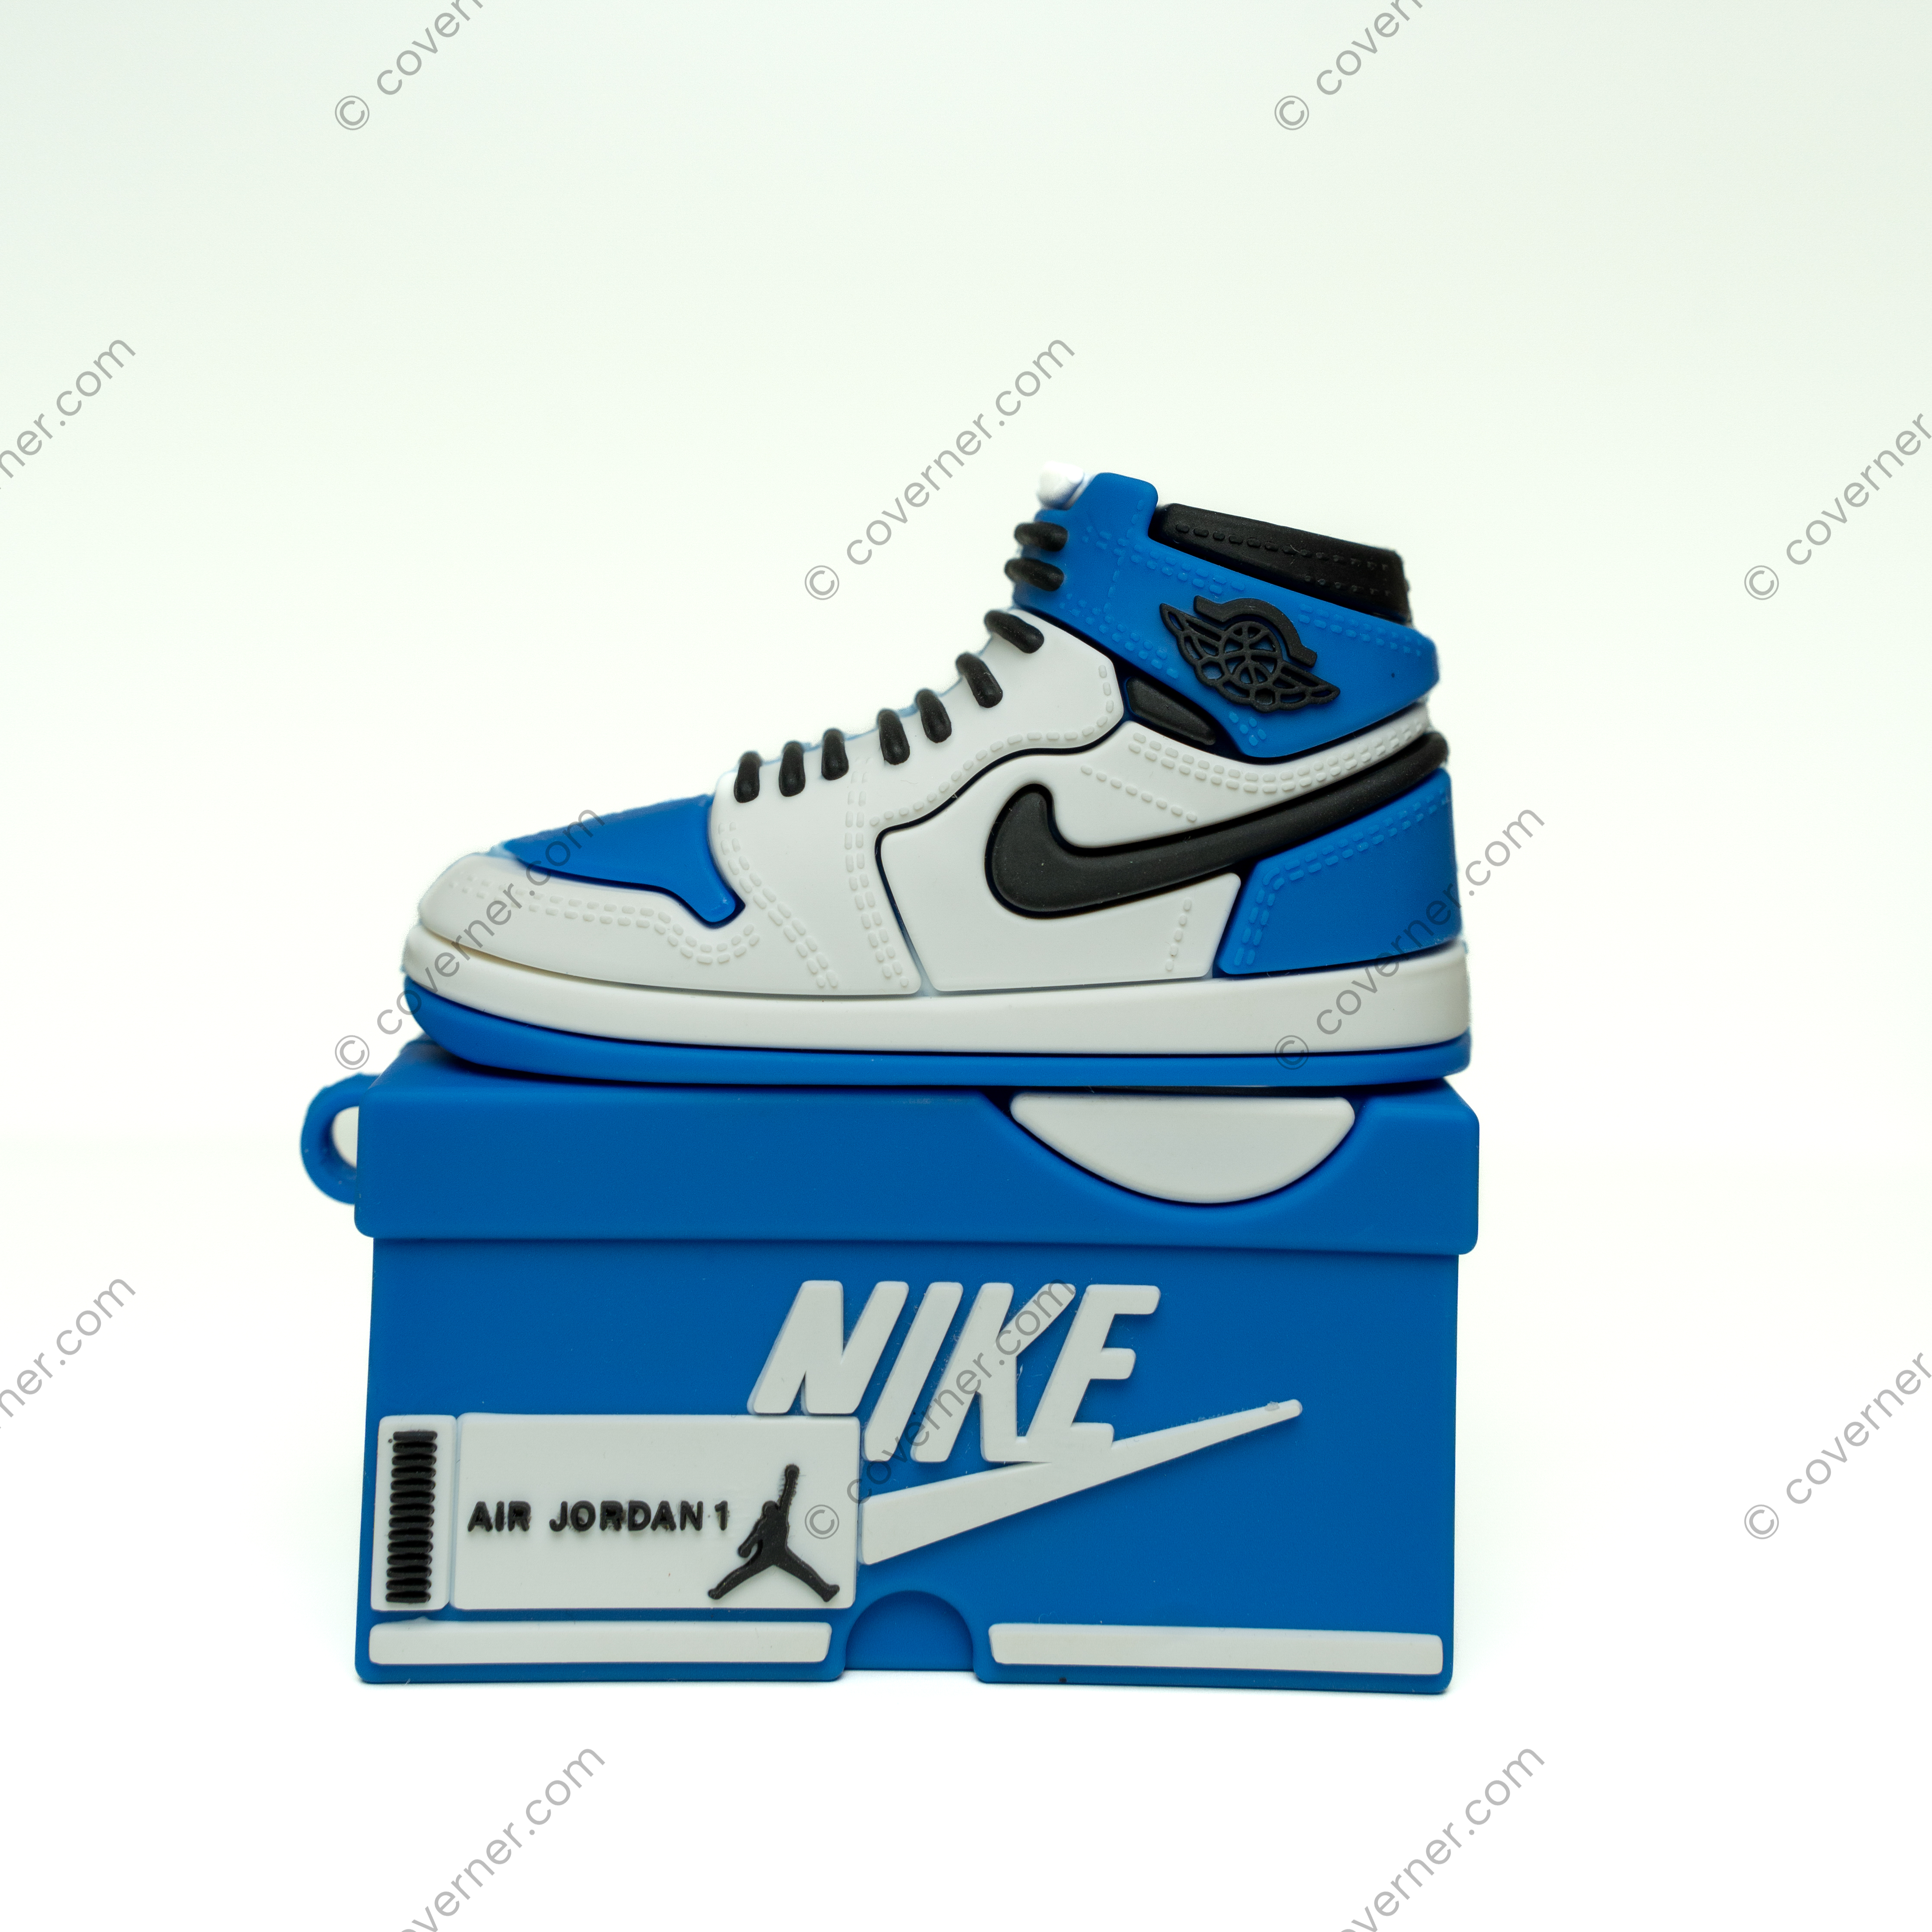 Sneaker Airpods Cases - Air Jordan 1 University Blue